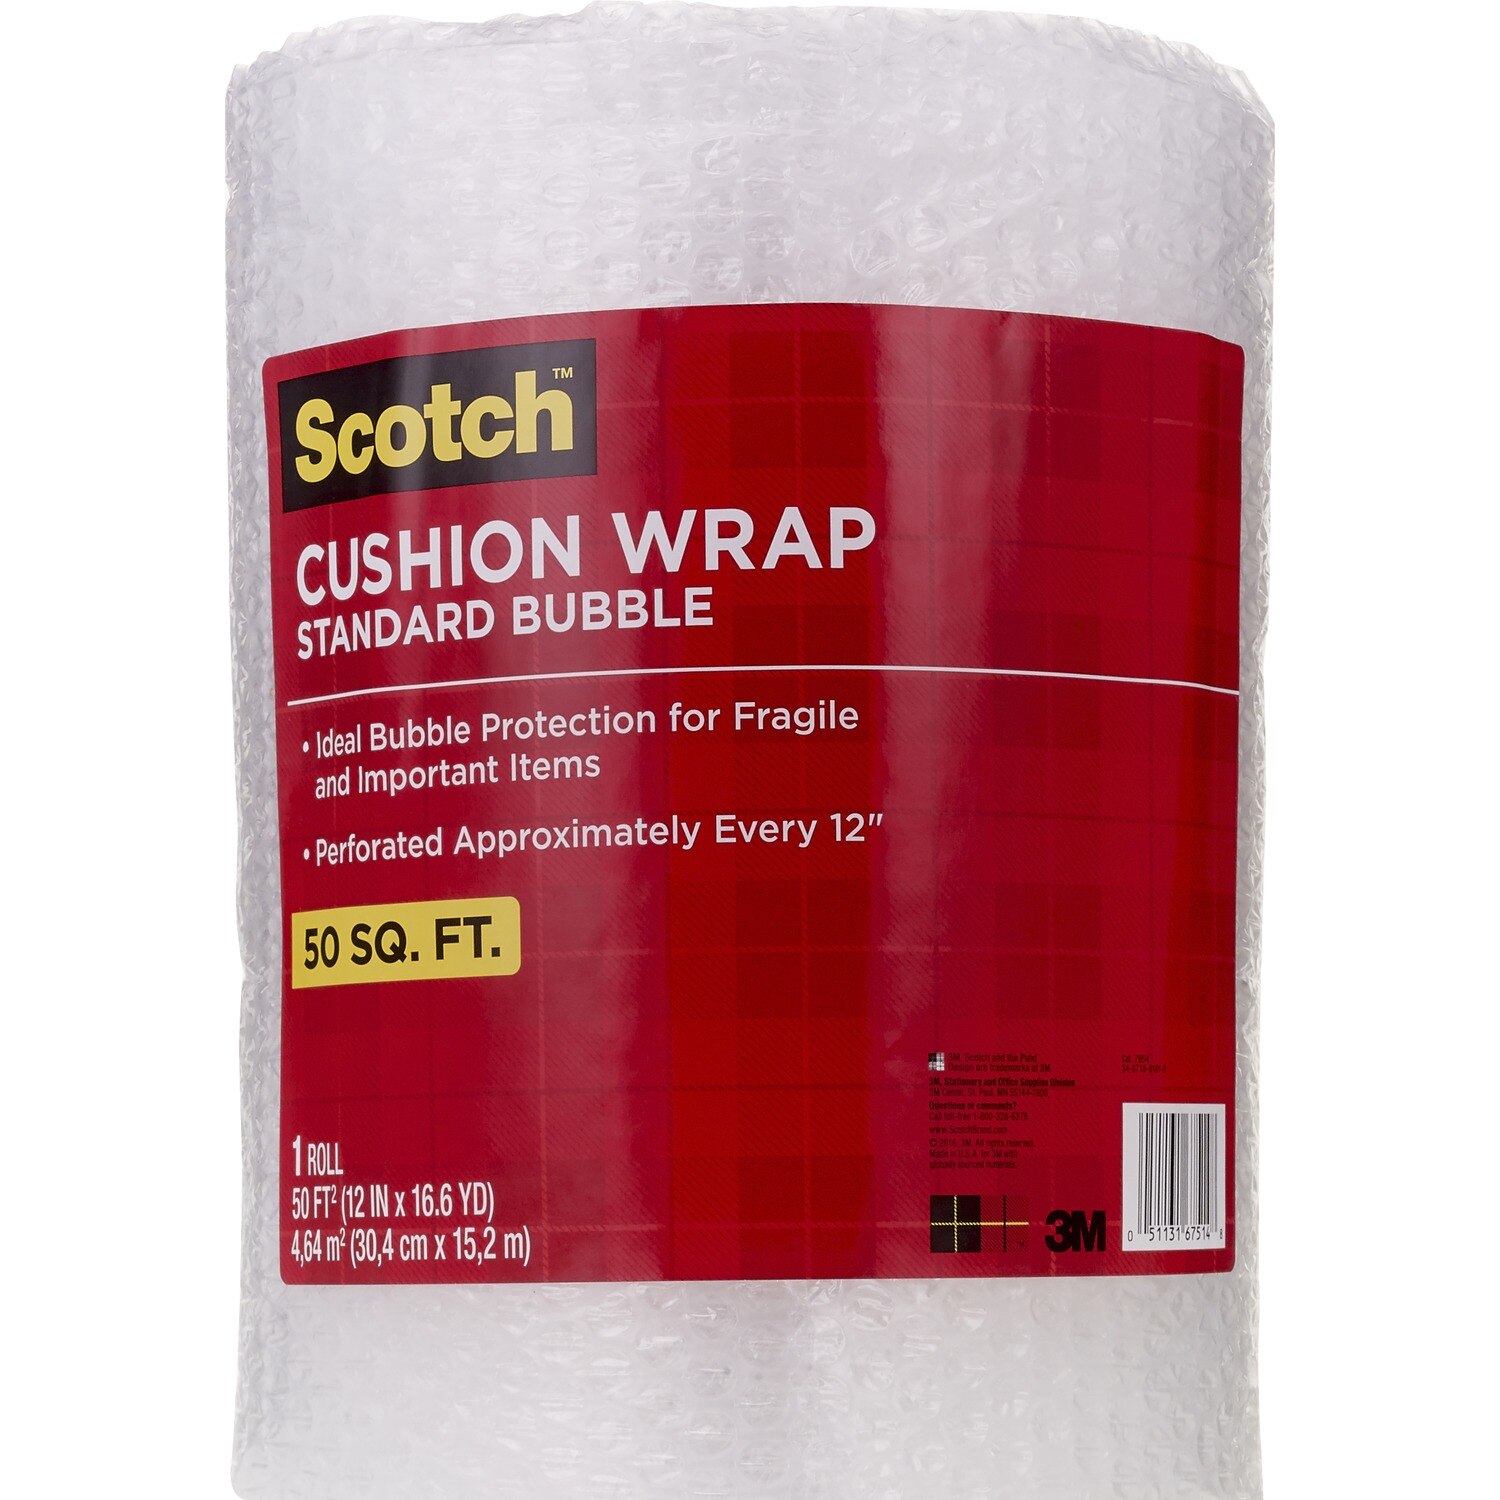 Scotch Perforated Cushion Wrap